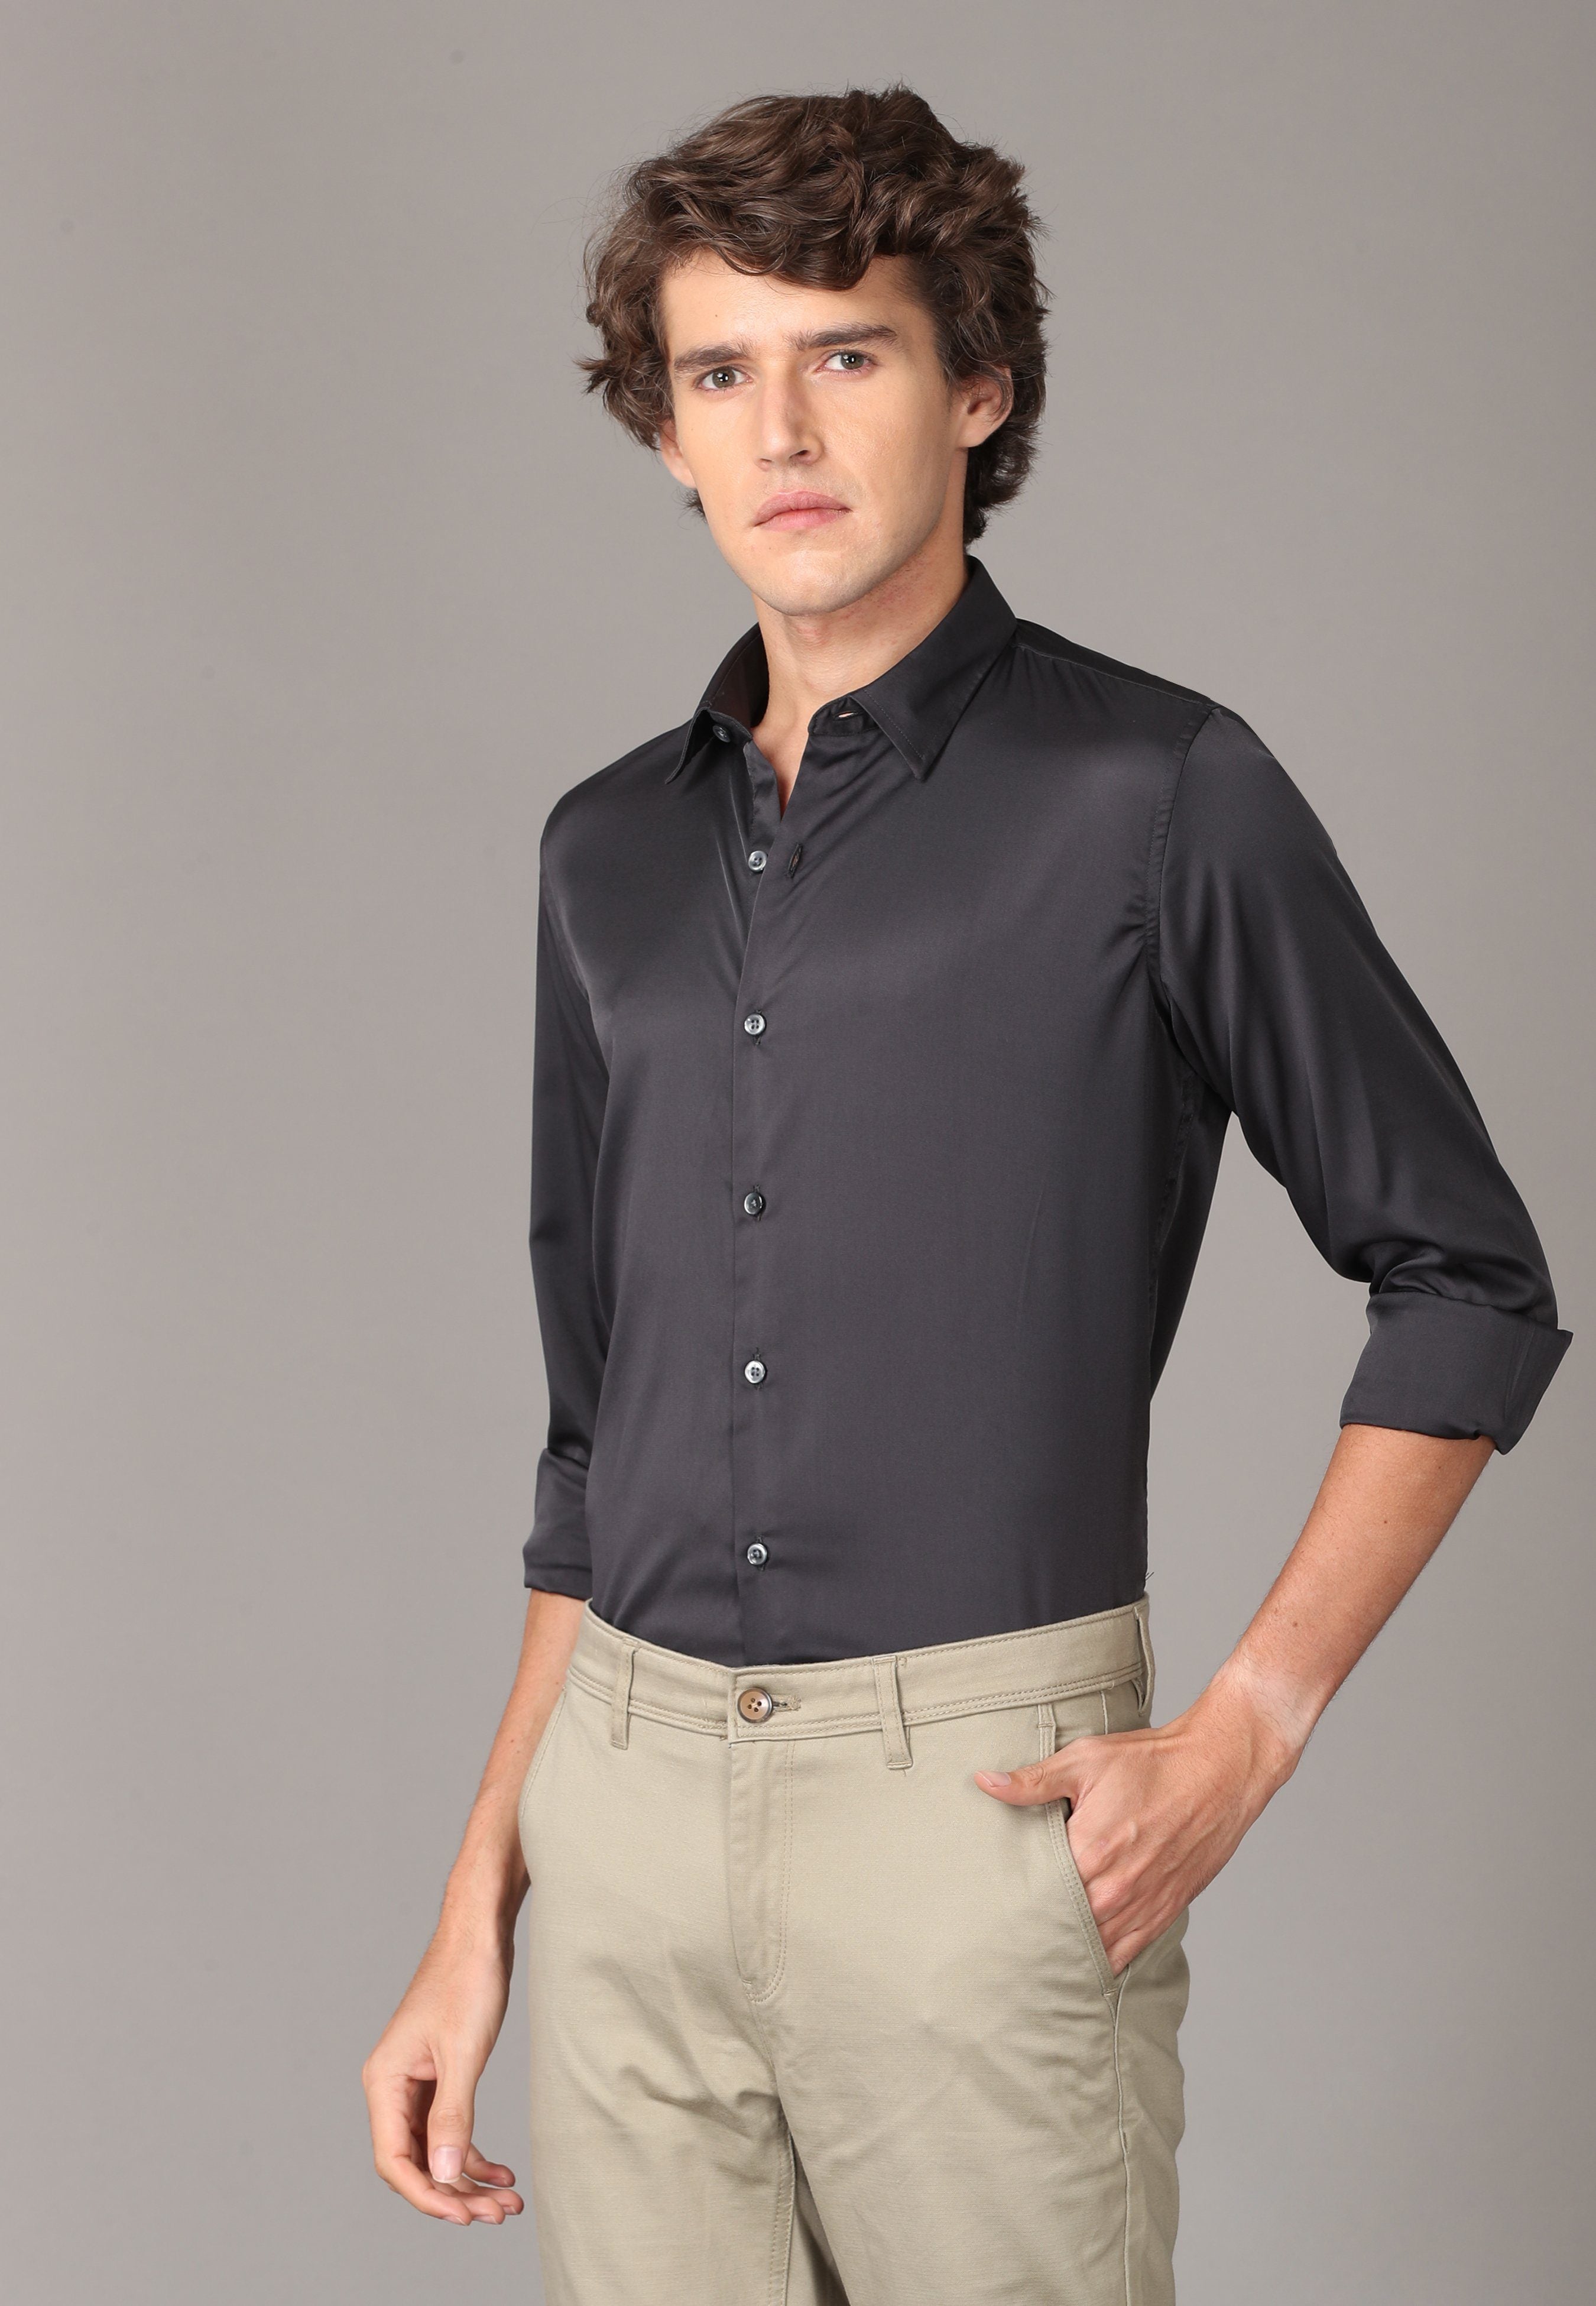 Glossy Black Full Sleeve Shirt Shirts KEF S 